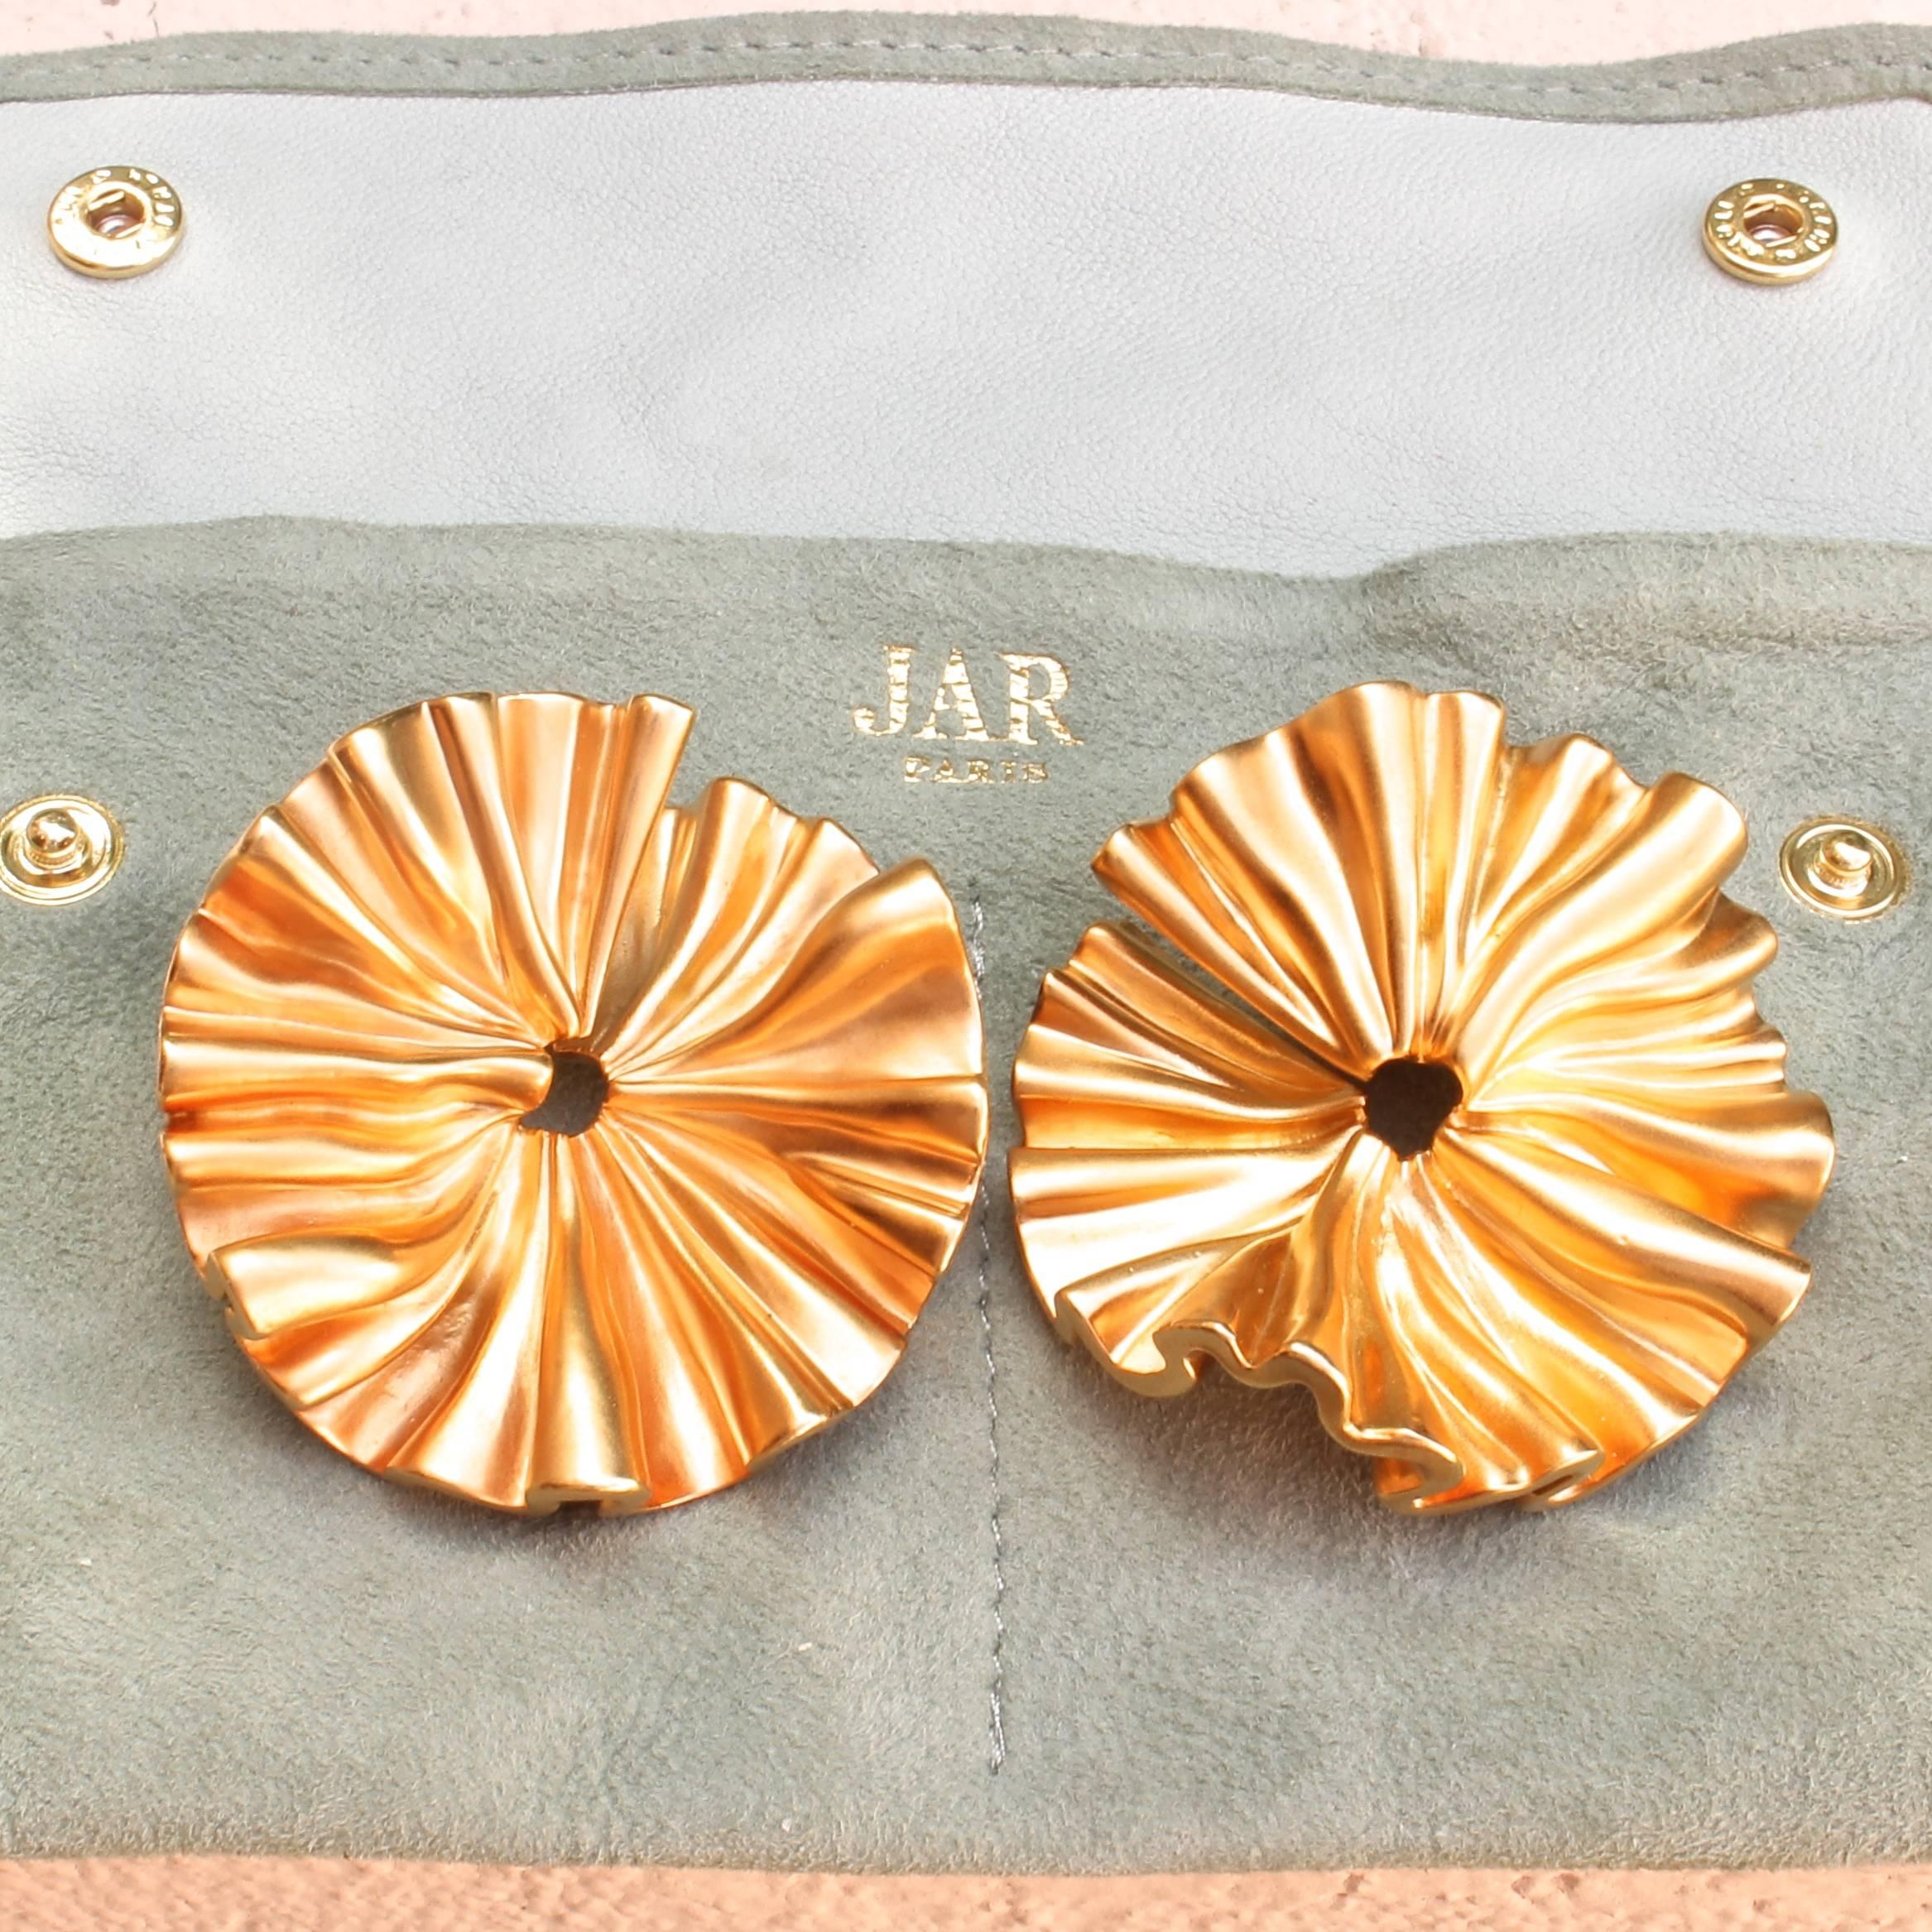 jar earrings